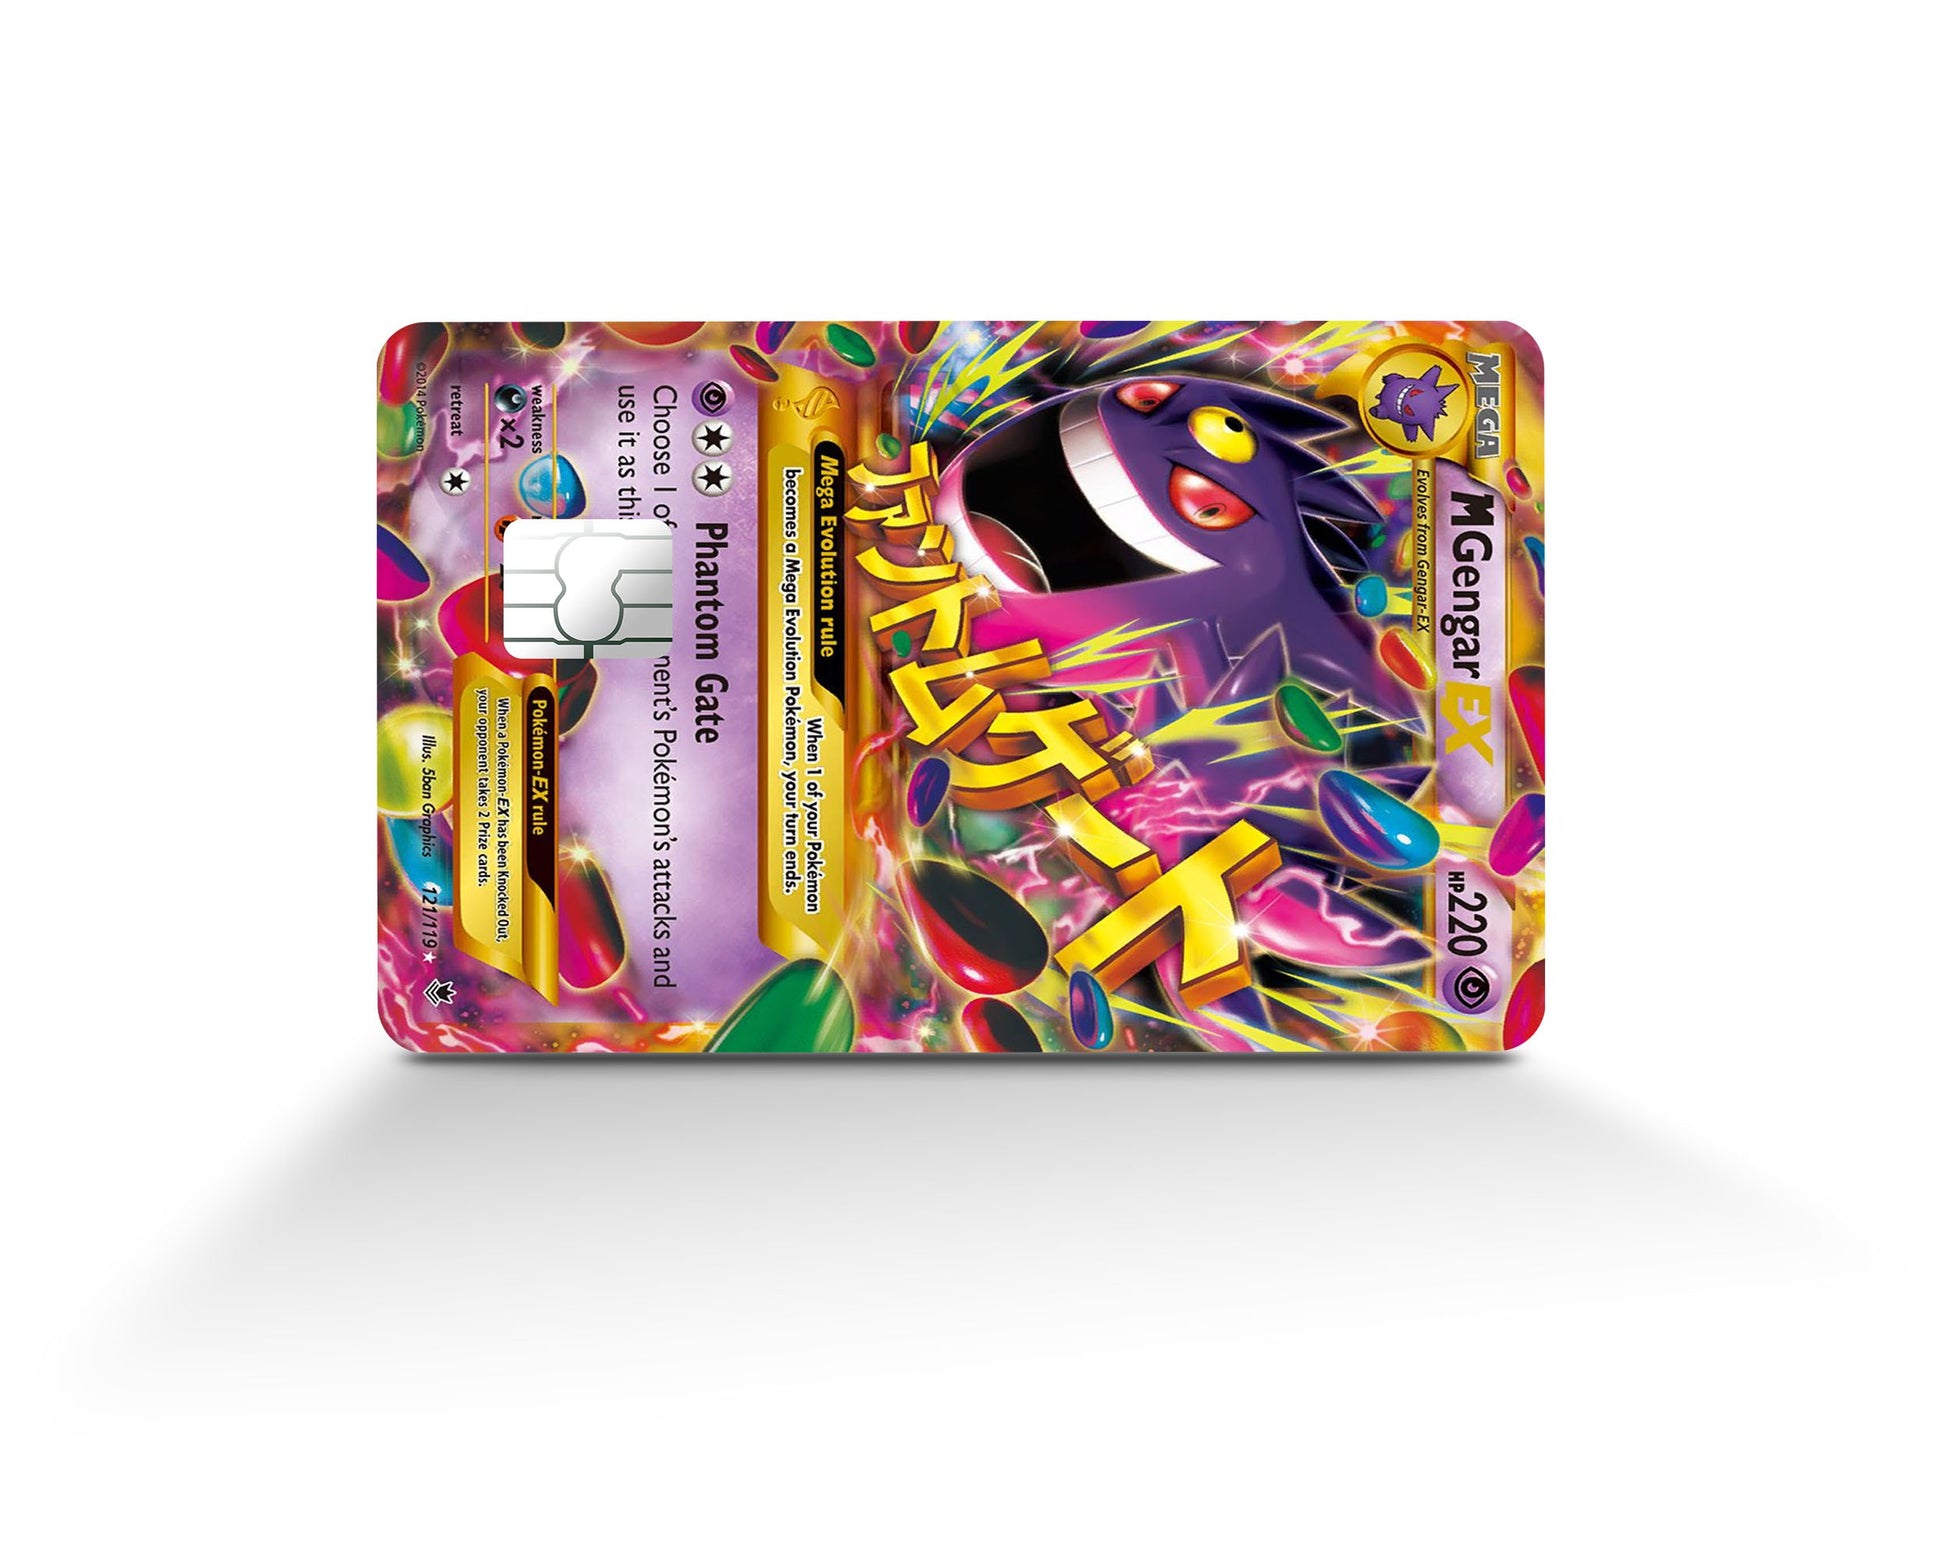 Mega Mewtwo X Pokemon Card Credit Card Credit Card Skin – Anime